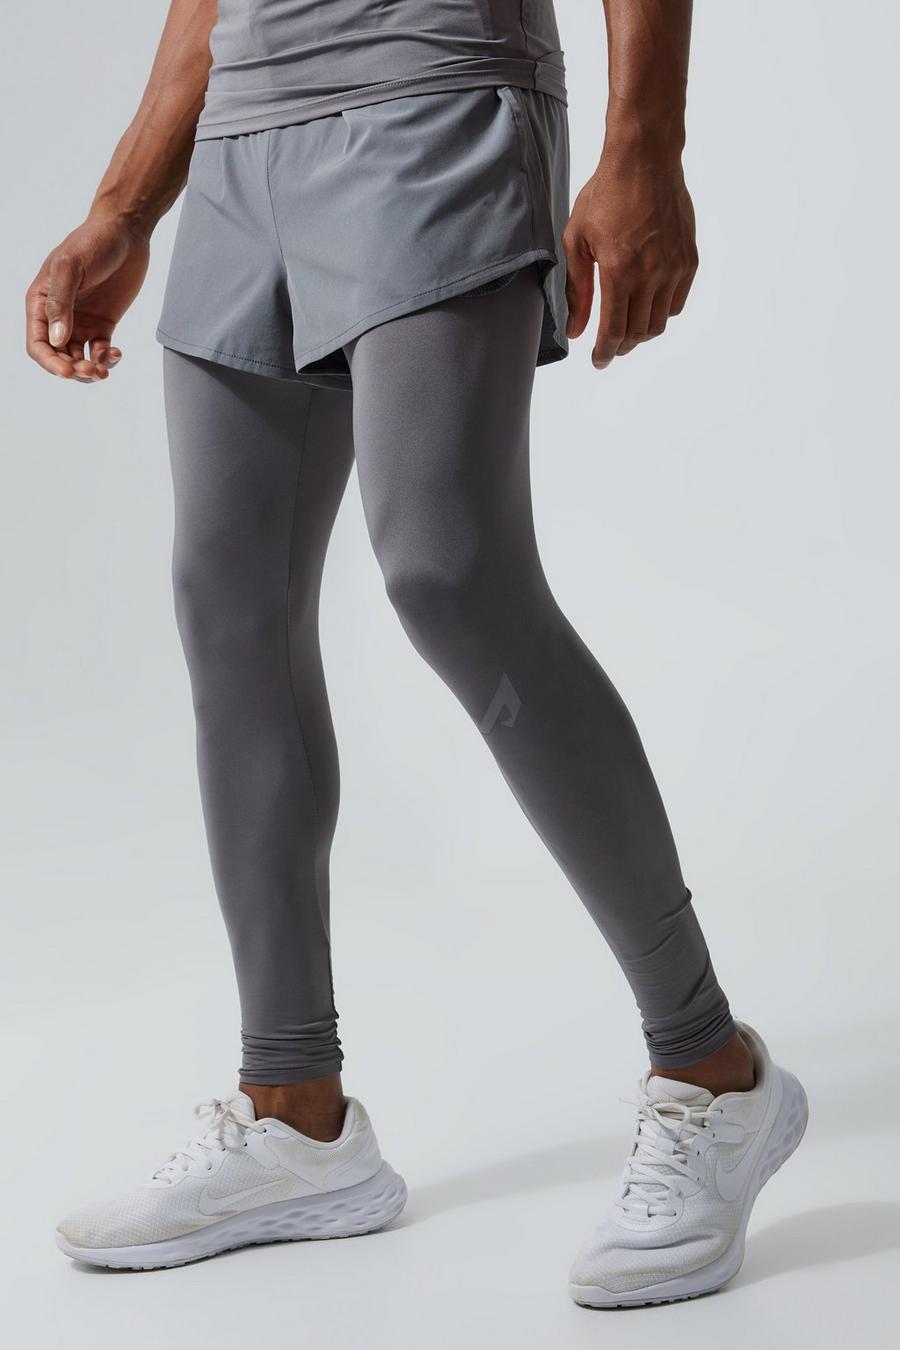 Charcoal grey Active Runner Short